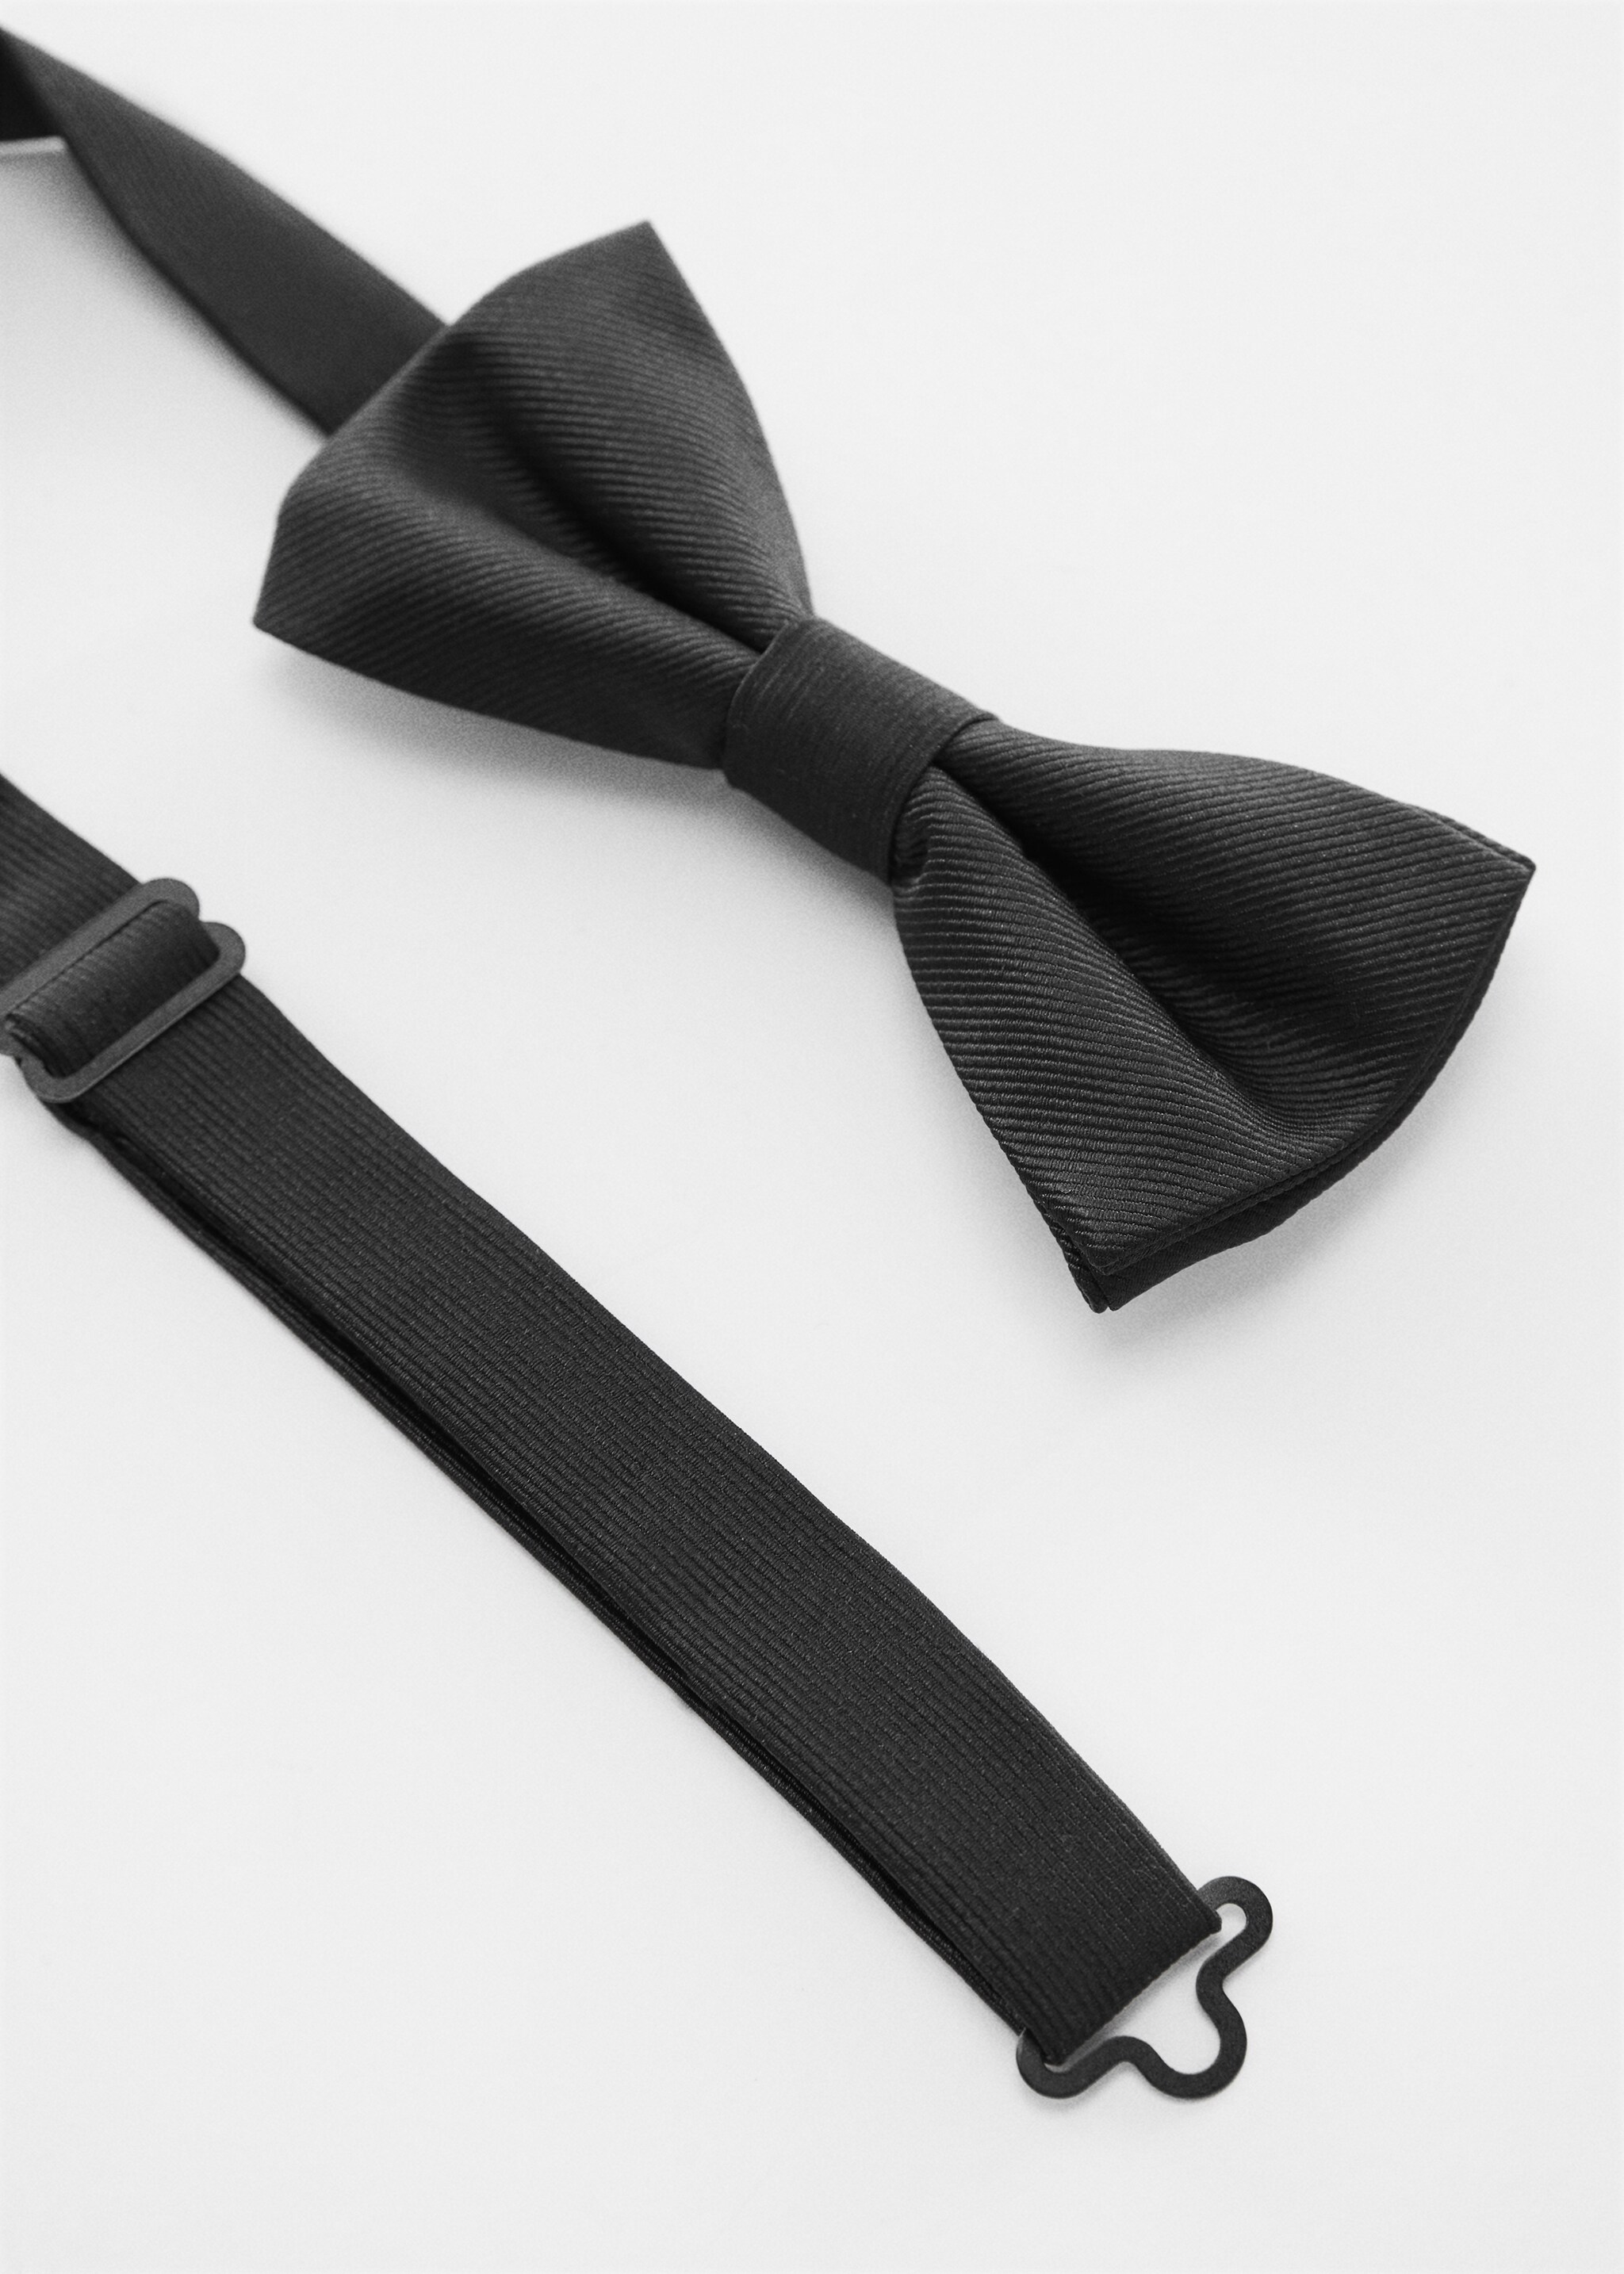 Textured bow tie - Medium plane